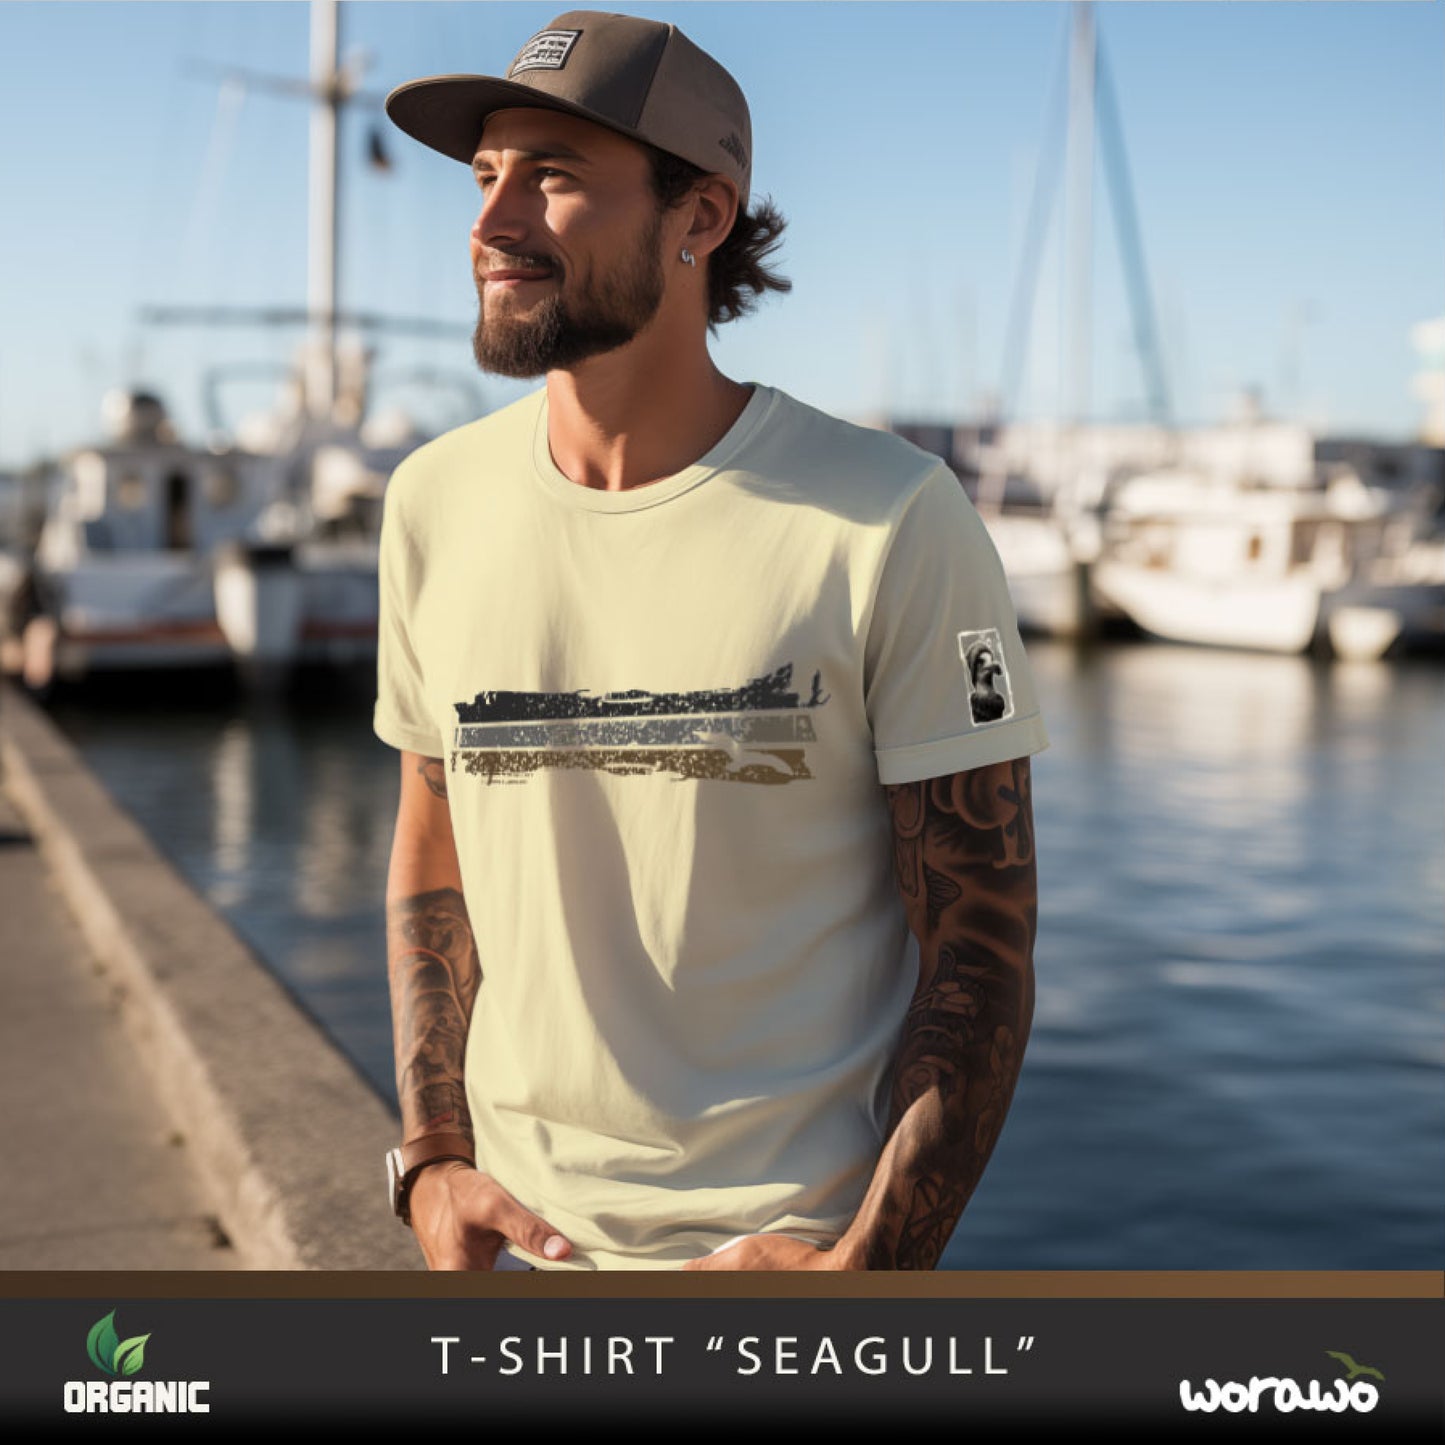 T-Shirt "Seagull"